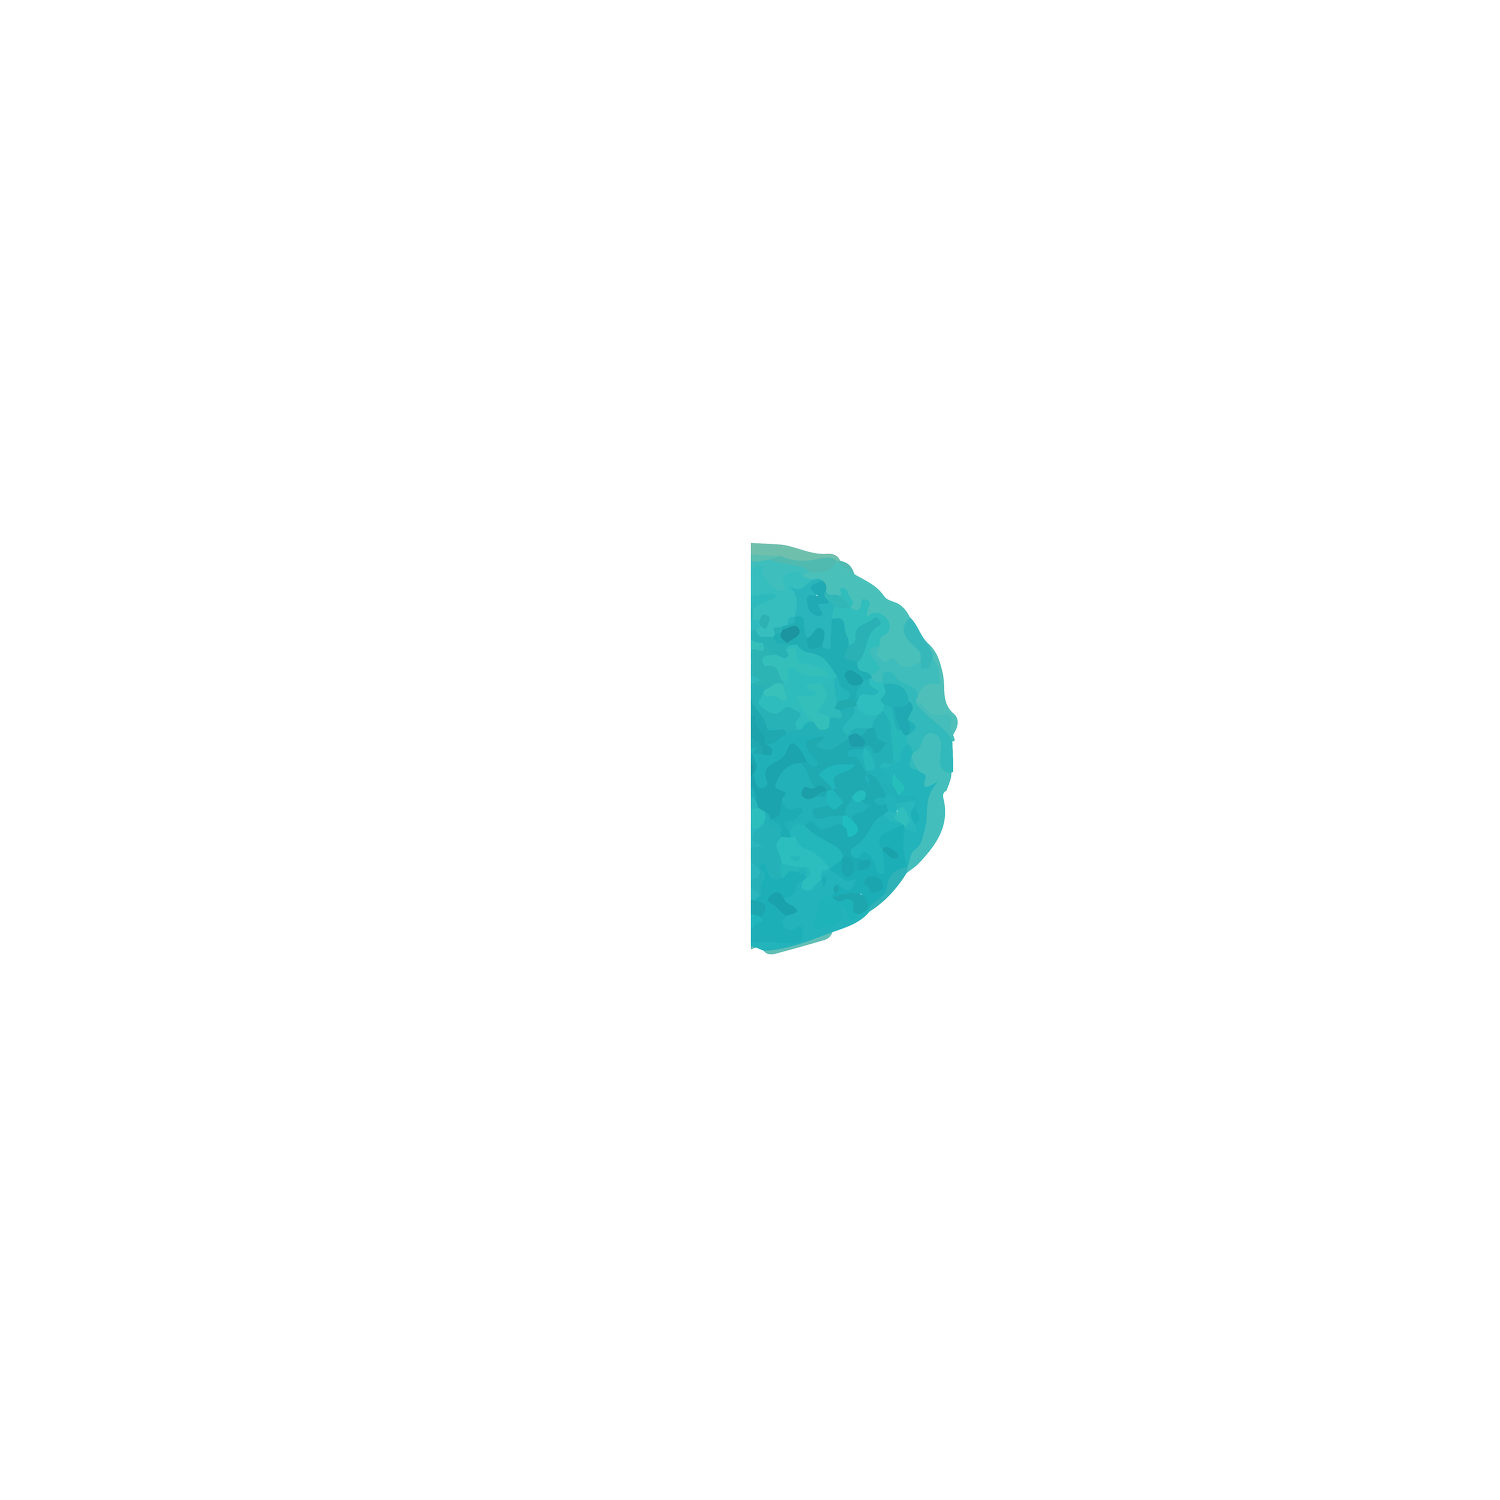 Lisa Patrick